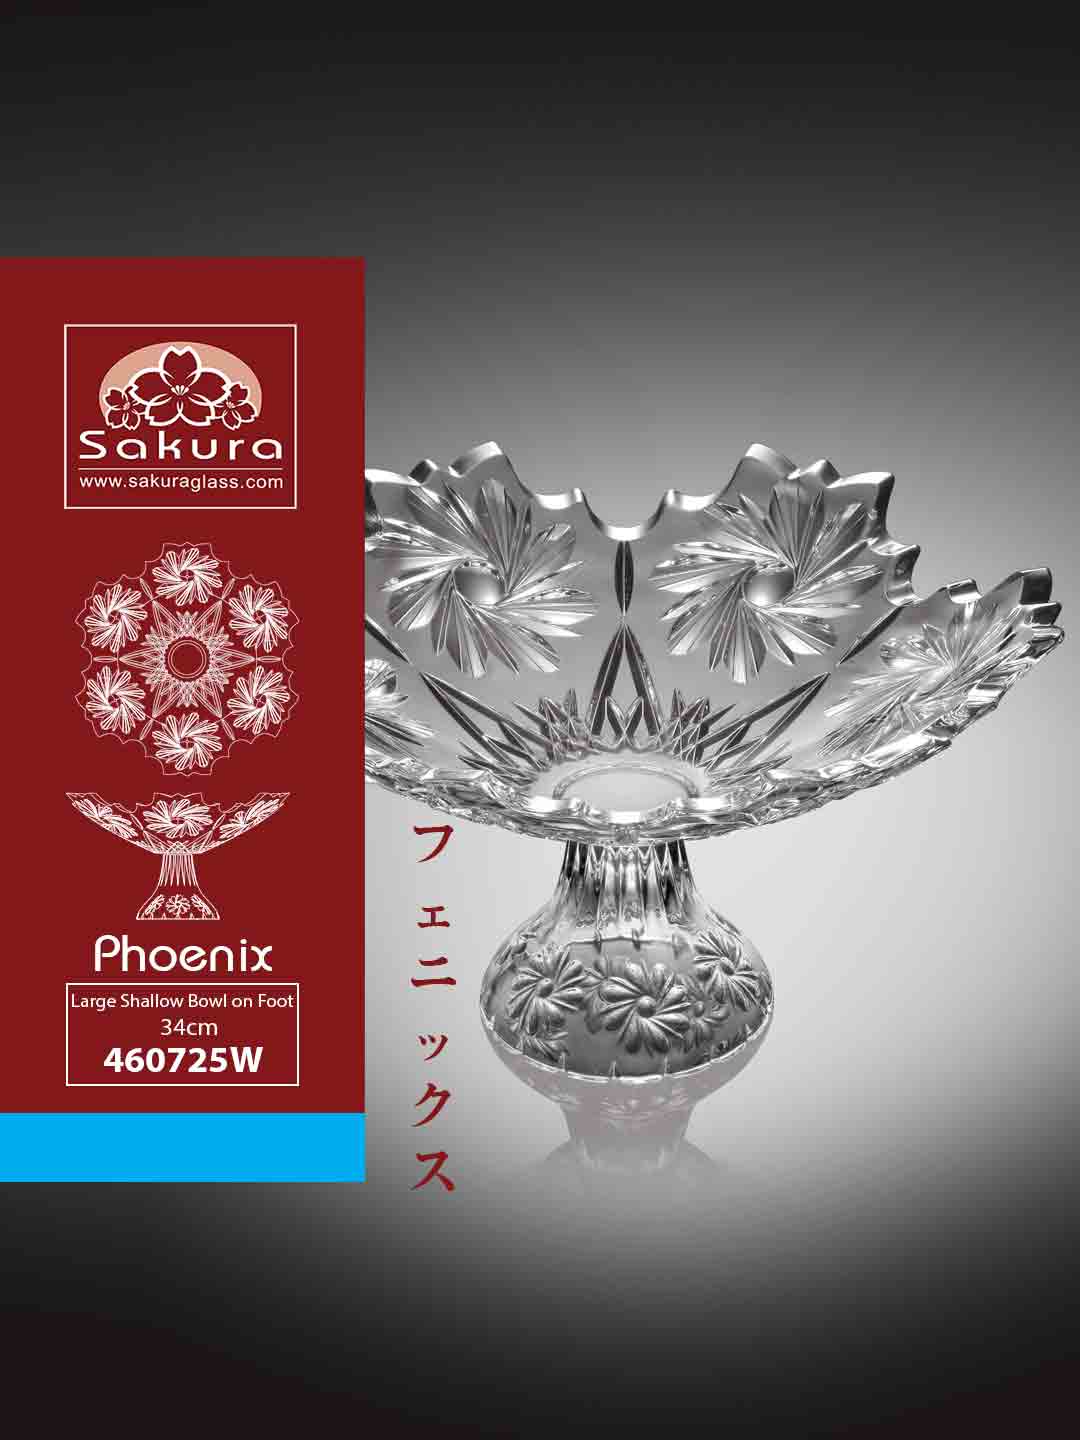 Sakura Product Phoenix Large Shallow Bowl on Foot 34cm 460725W